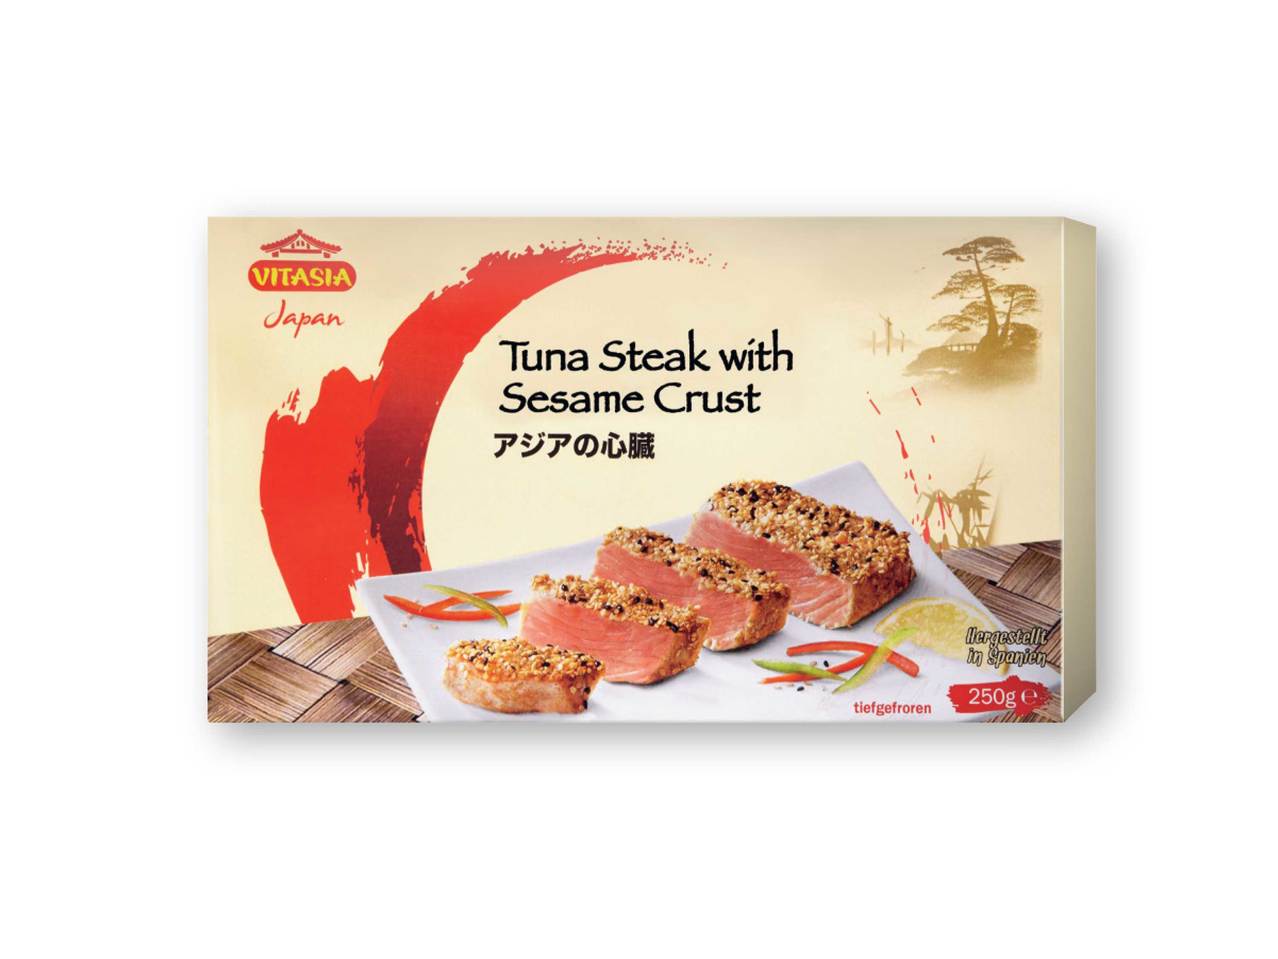 VITASIA(R) Tuna Steak with Sesame Crust